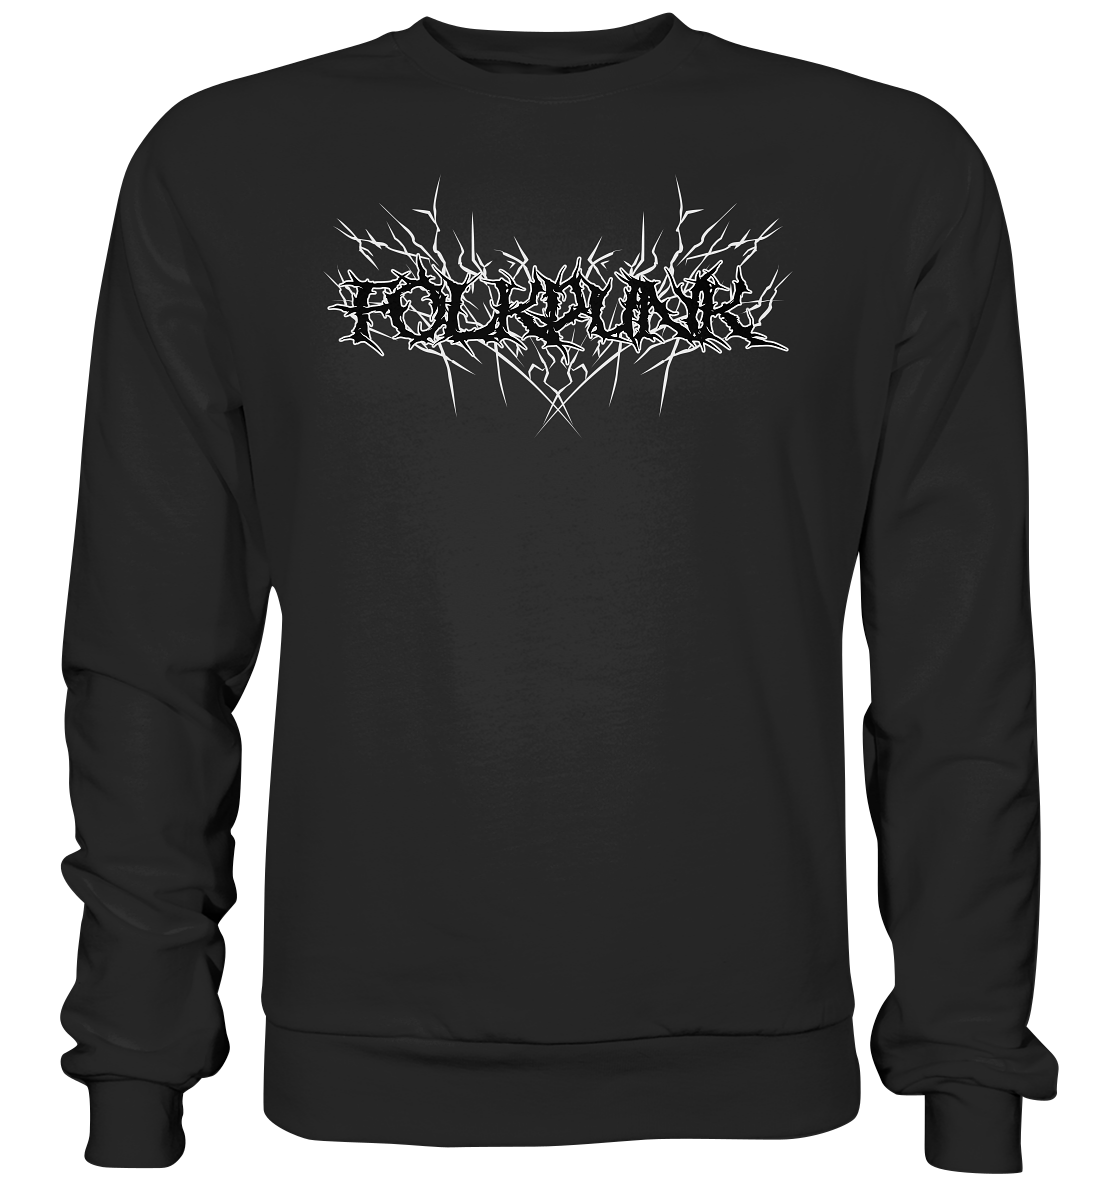 Folkpunk "Metal Band" - Premium Sweatshirt